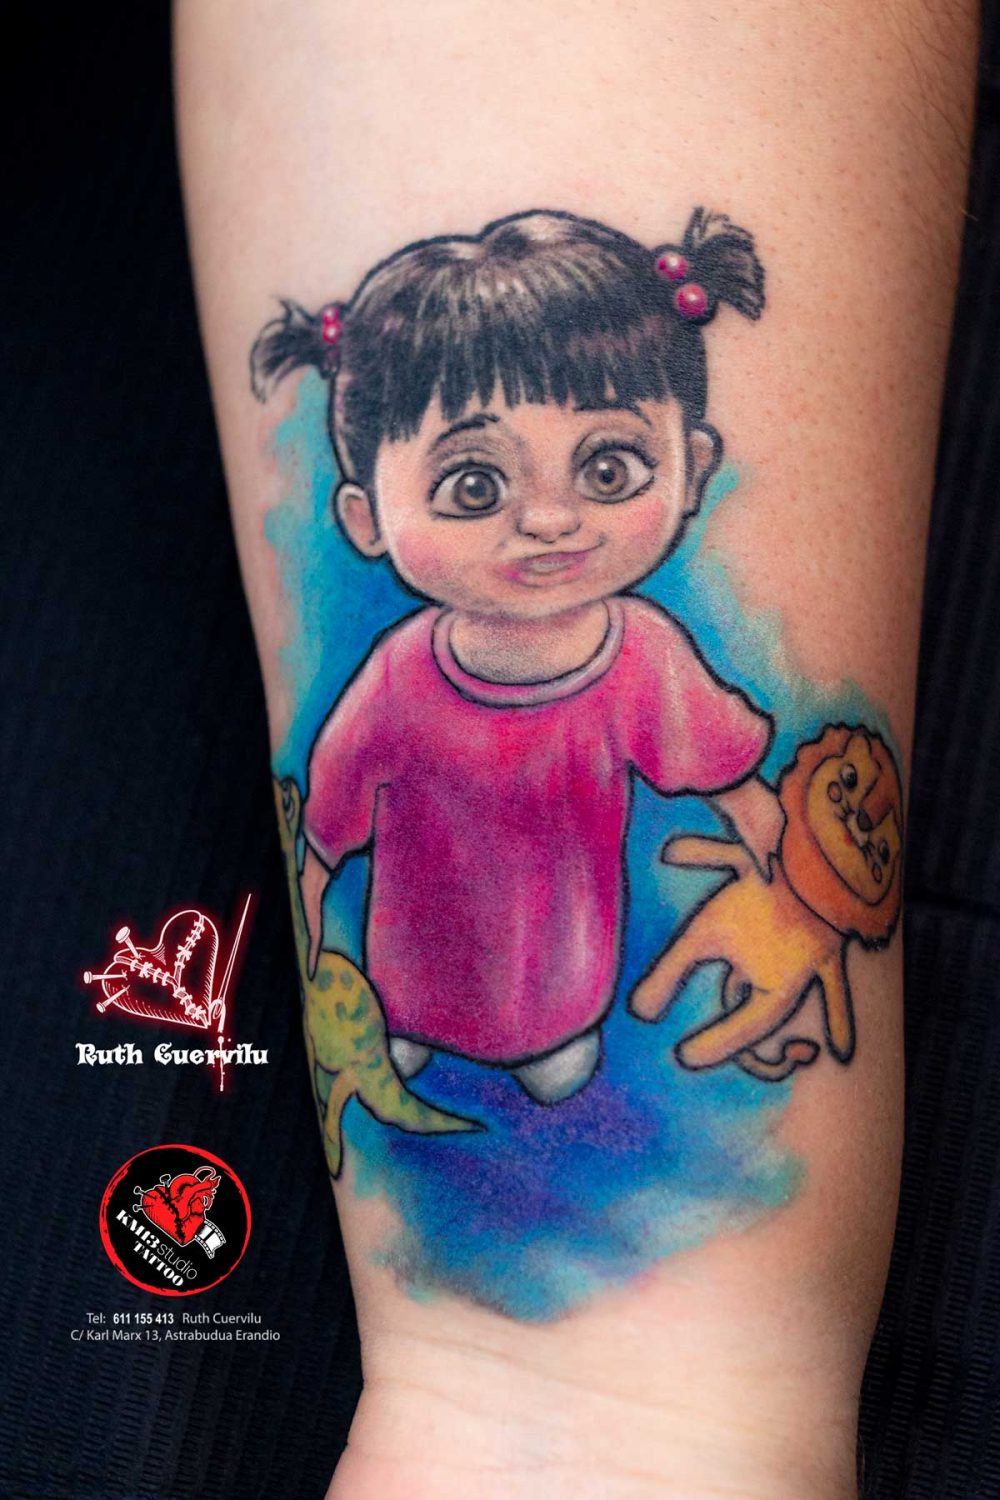 Tatuaje Boo Montruos SA - Monters Inc - Ruth Cuervilu Tattoo - KM13 Studio - estudio de tatuajes erandio astrabudua bilbao bizkaia